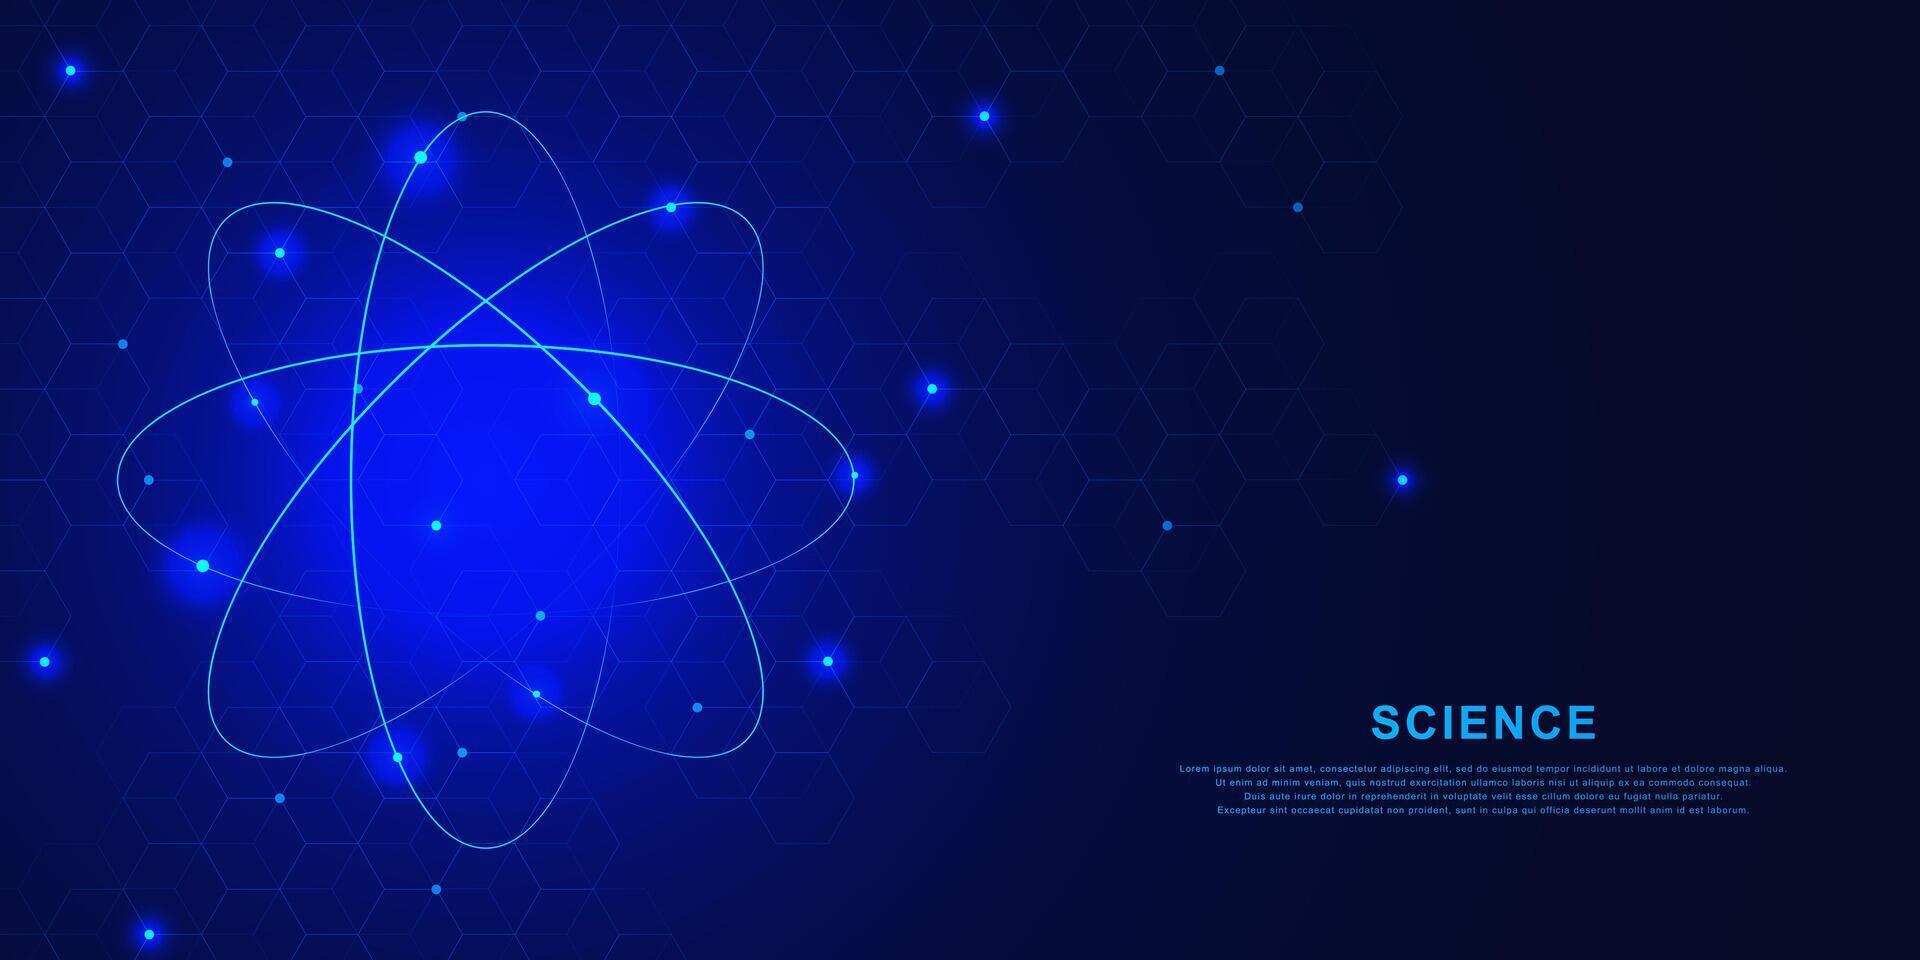 nuclear átomo holograma con molecular estructura para Ciencias y tecnología concepto en oscuro azul antecedentes. vector ilustración.